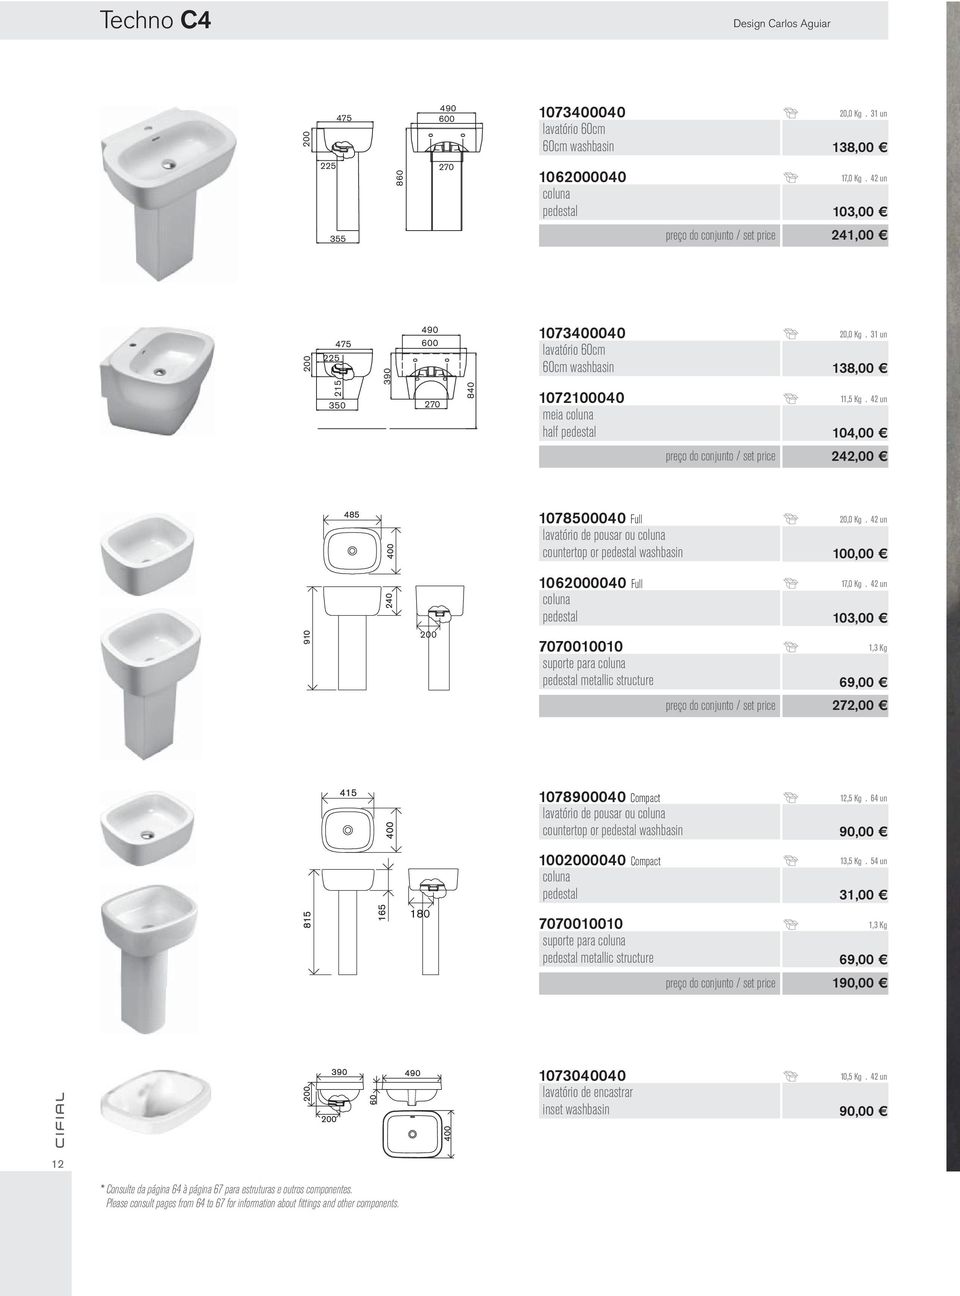 31 un 138,00 11,5 Kg. 42 un 104,00 preço do conjunto / set price 242,00 1078500040 Full lavatório de pousar ou coluna countertop or pedestal washbasin 20,0 Kg.